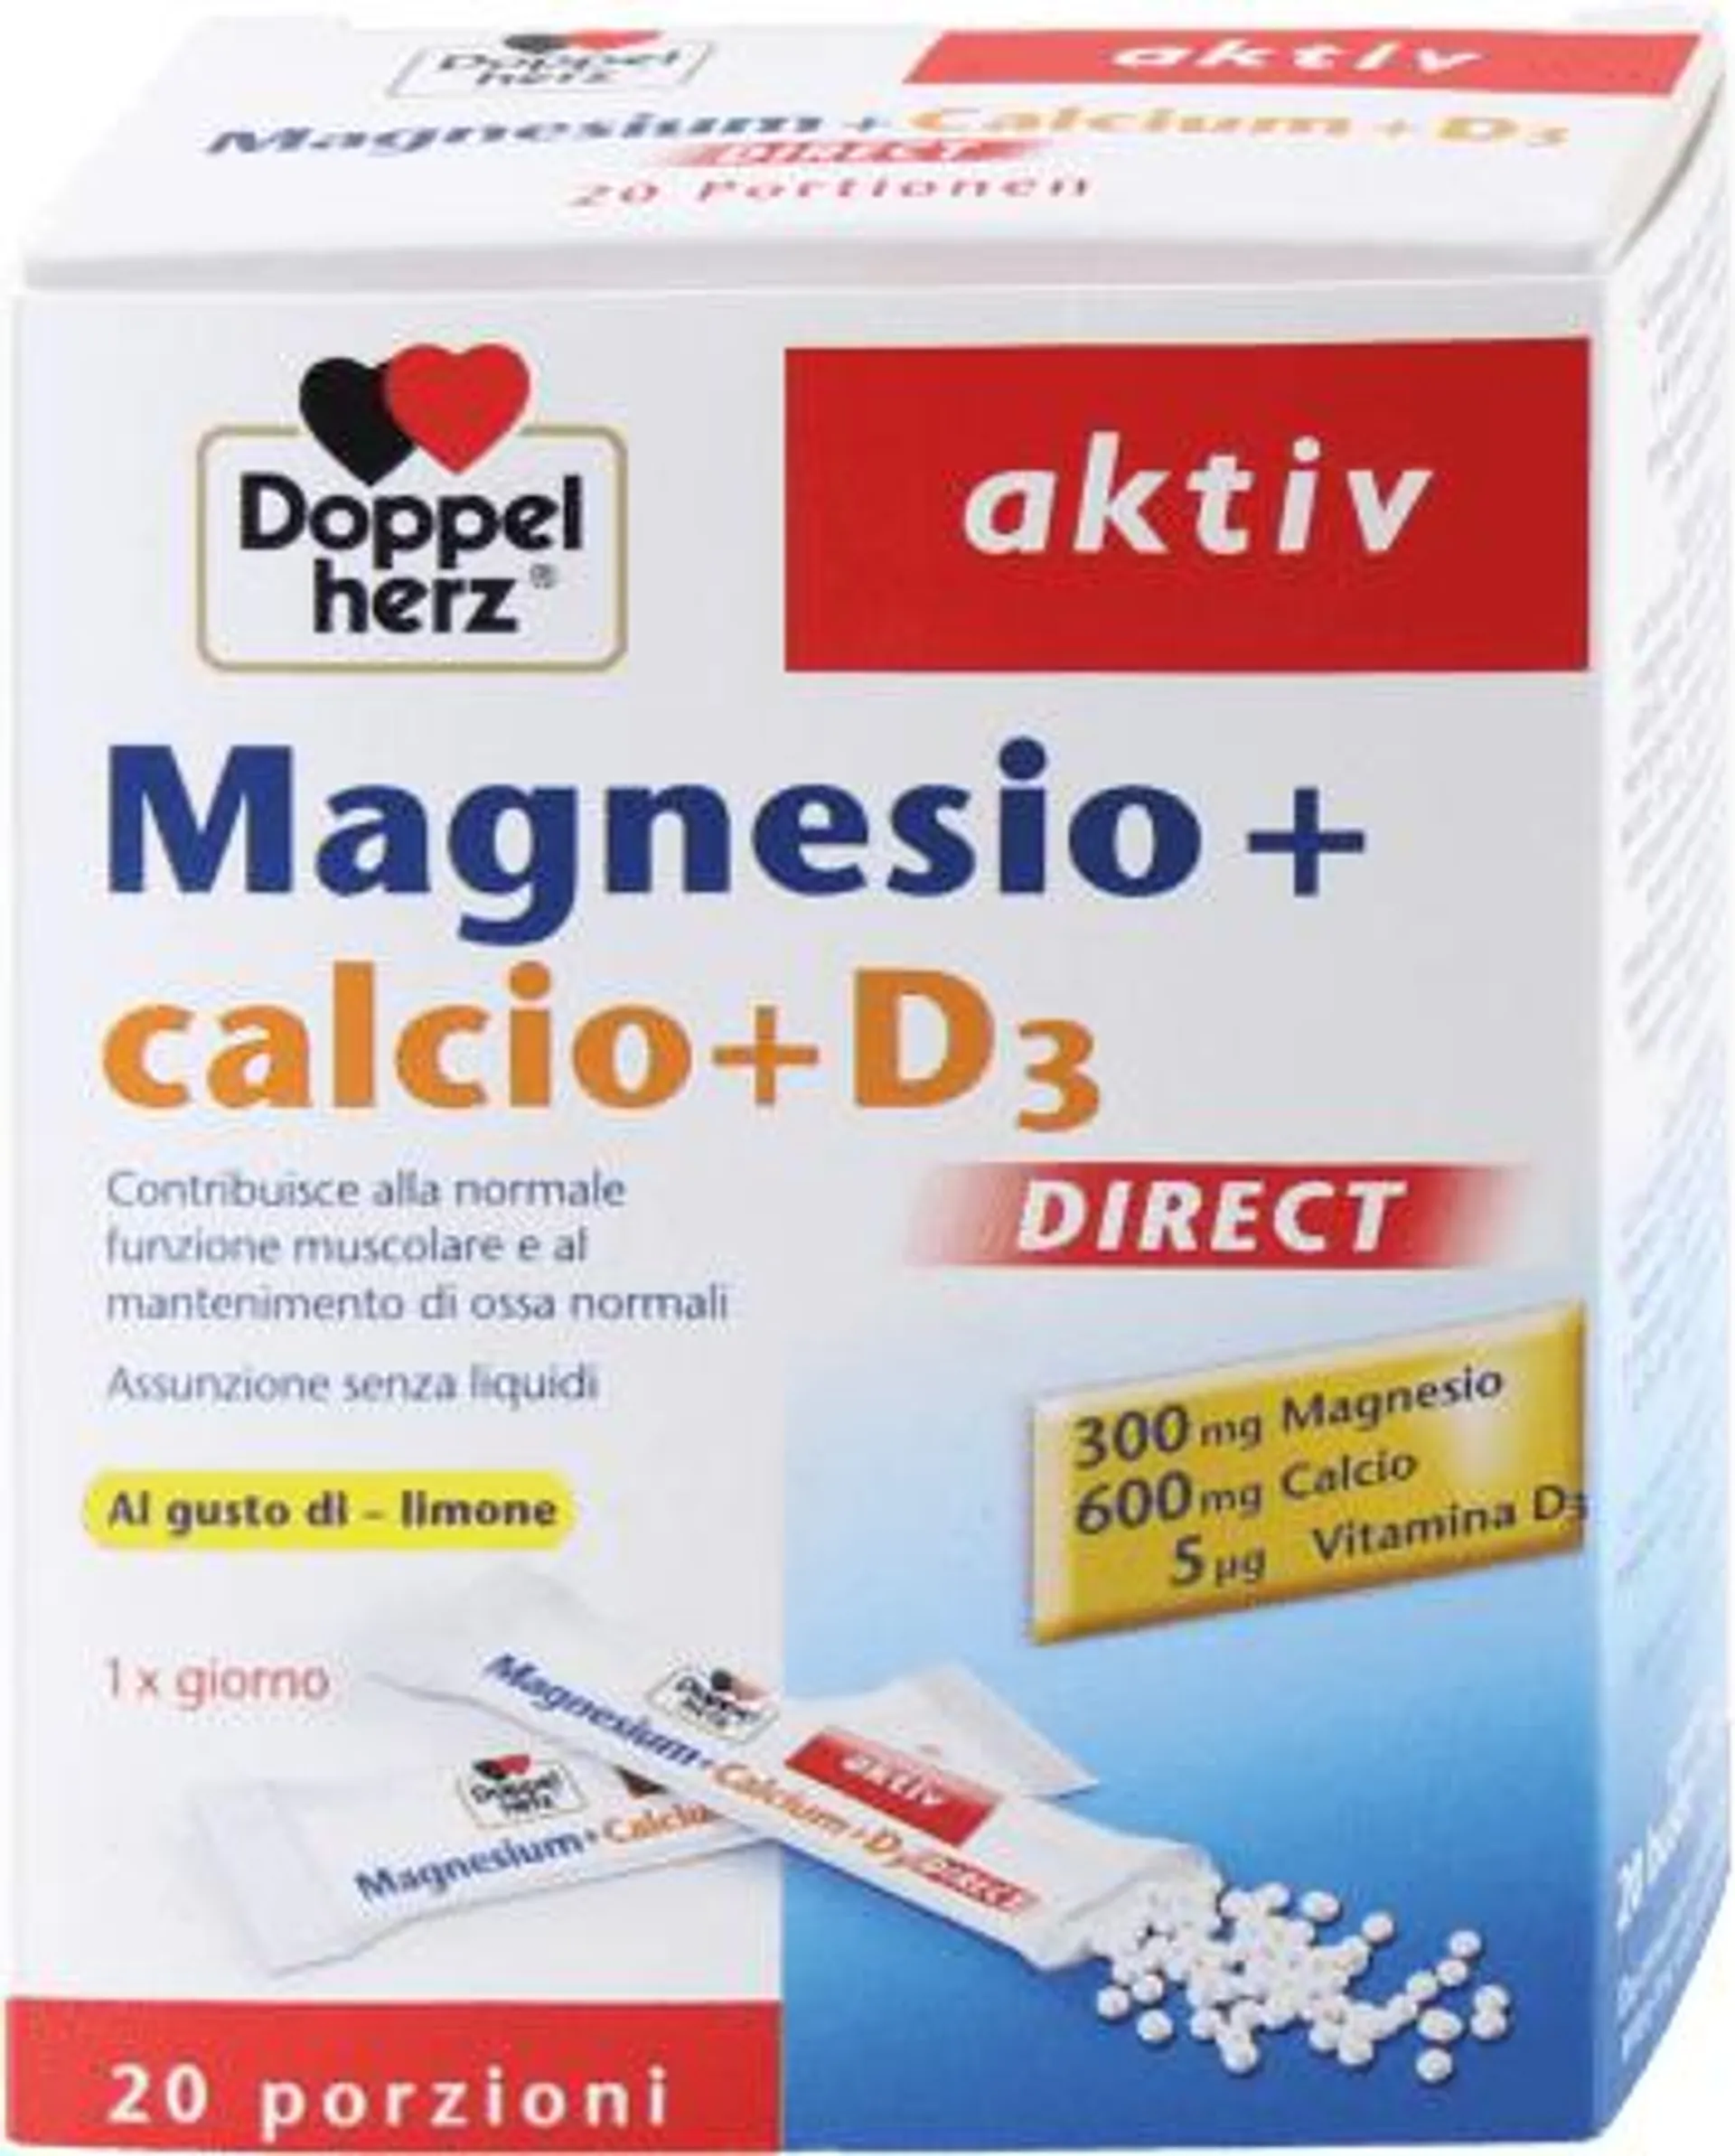 Magnesio + calcio + D3 DIRECT aktiv, 20 pz